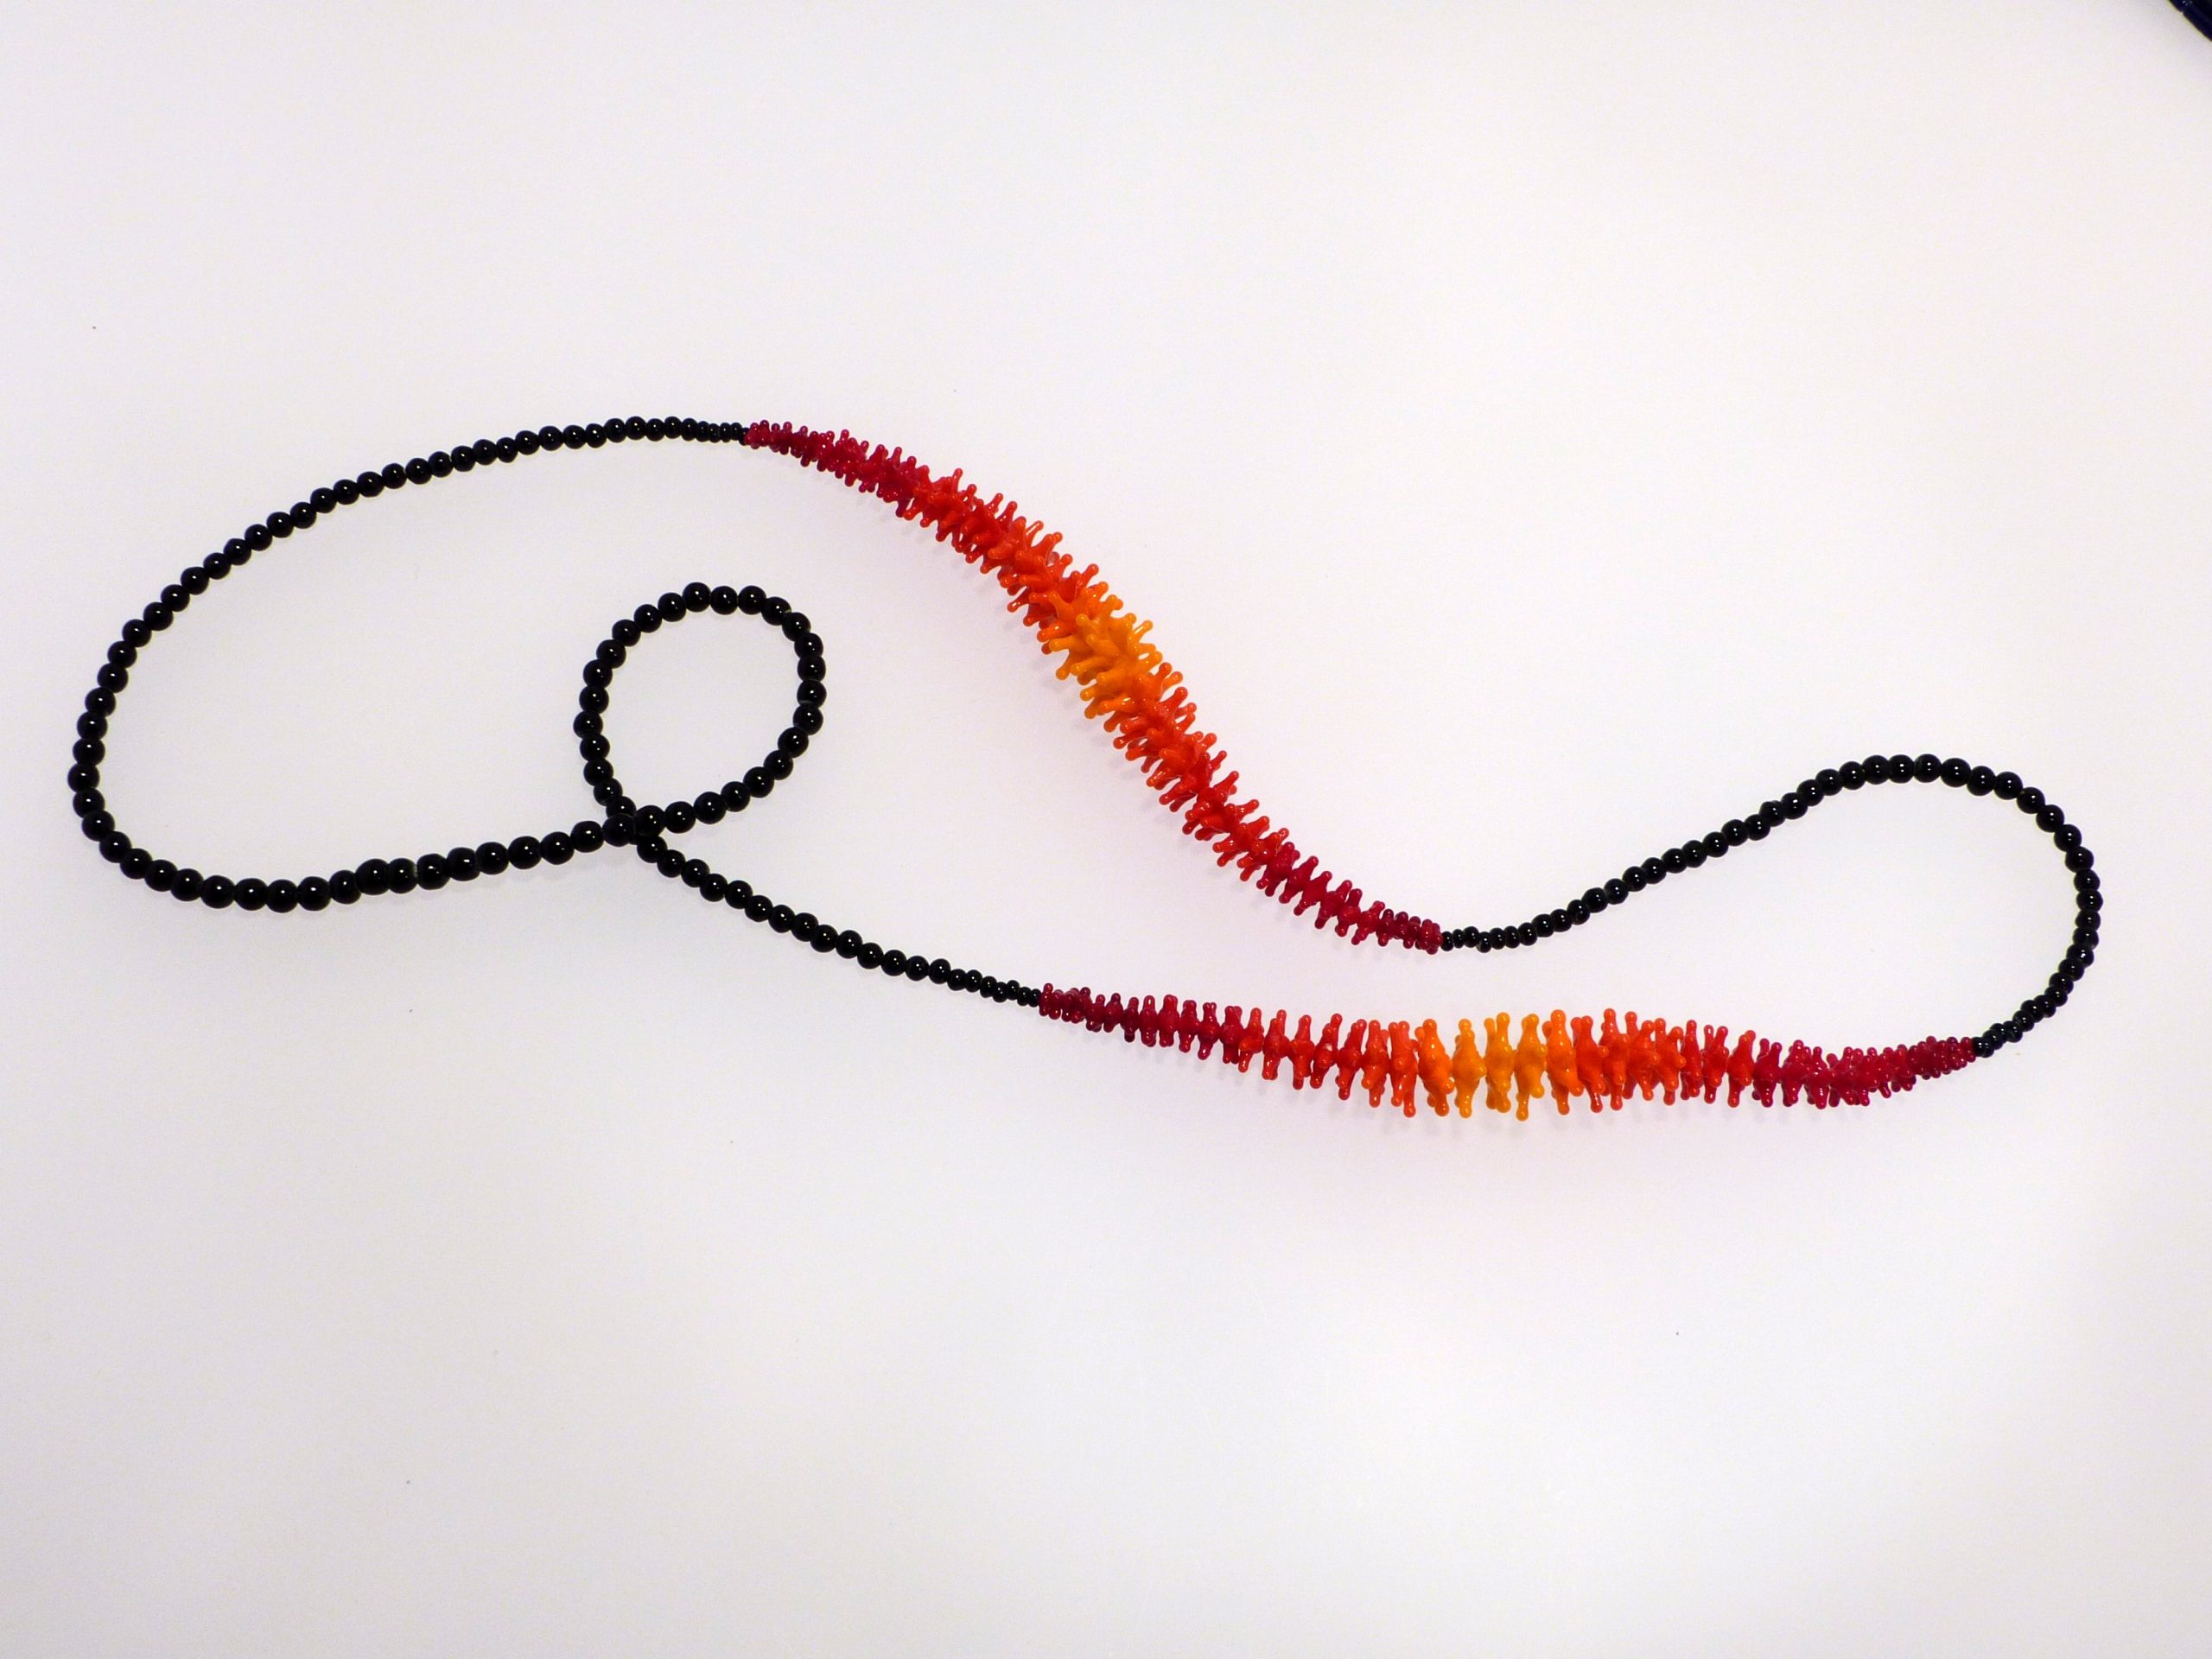 Wurm rot-orange Farbverlauf, lang | Glas, Stahlseil | 1401002-20